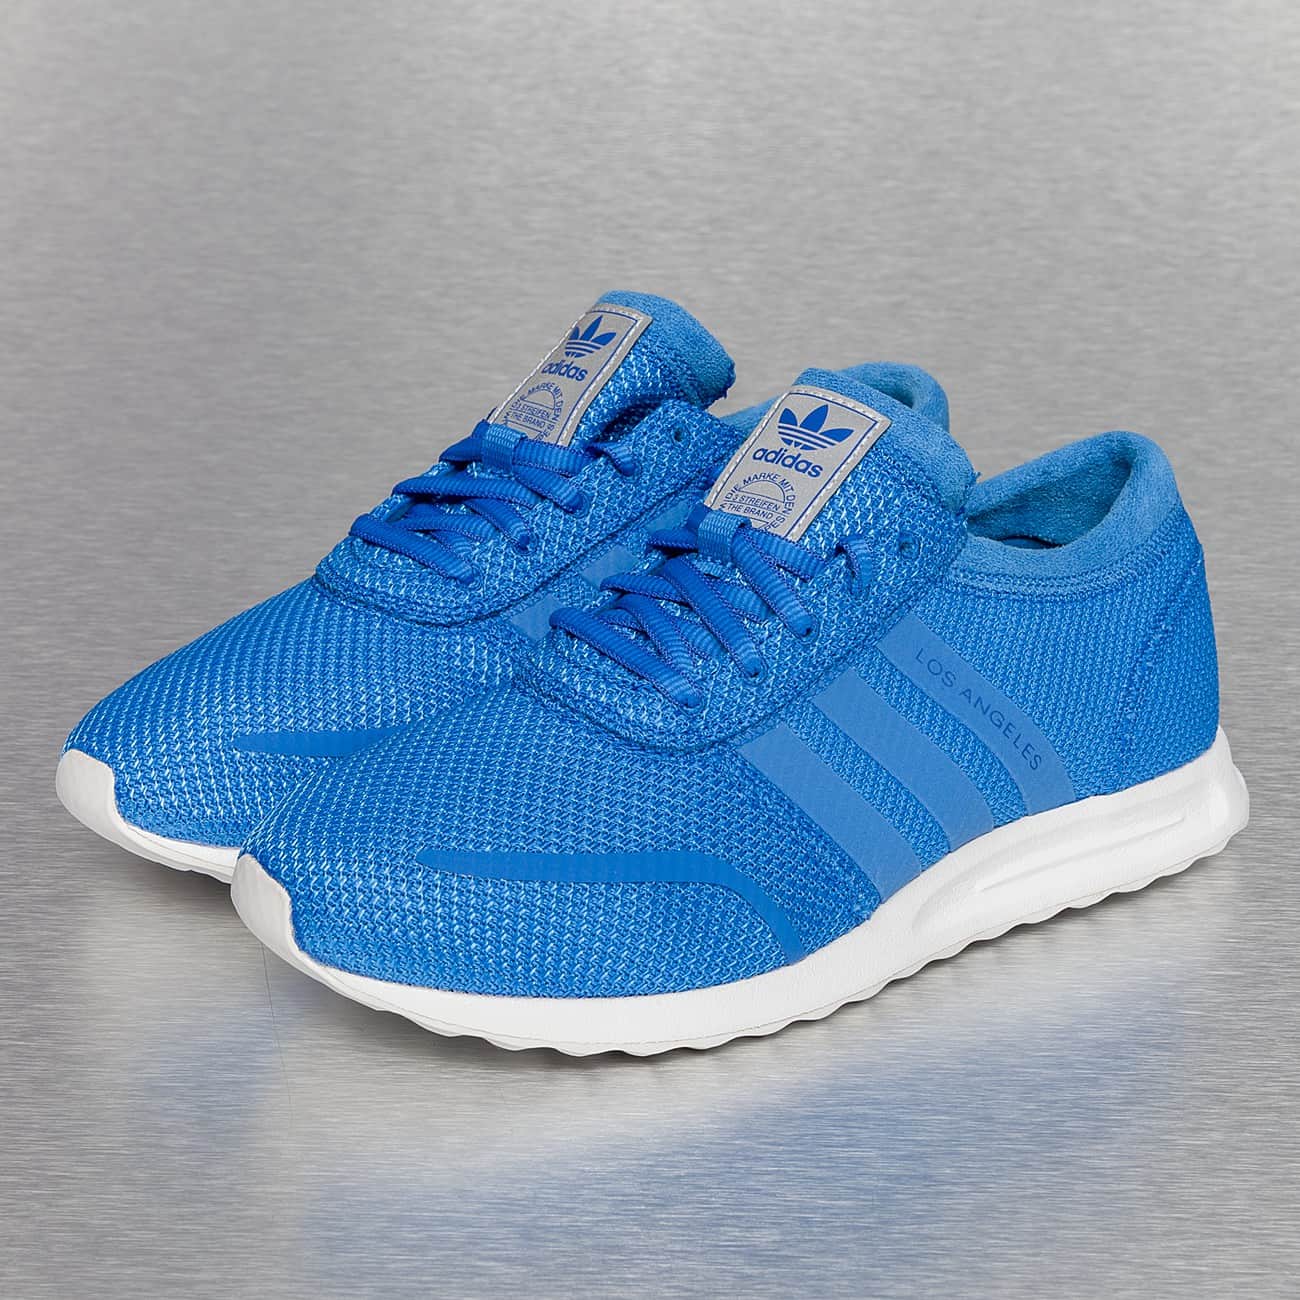 adidas-los-angeles-sneakers-shock-blue-white